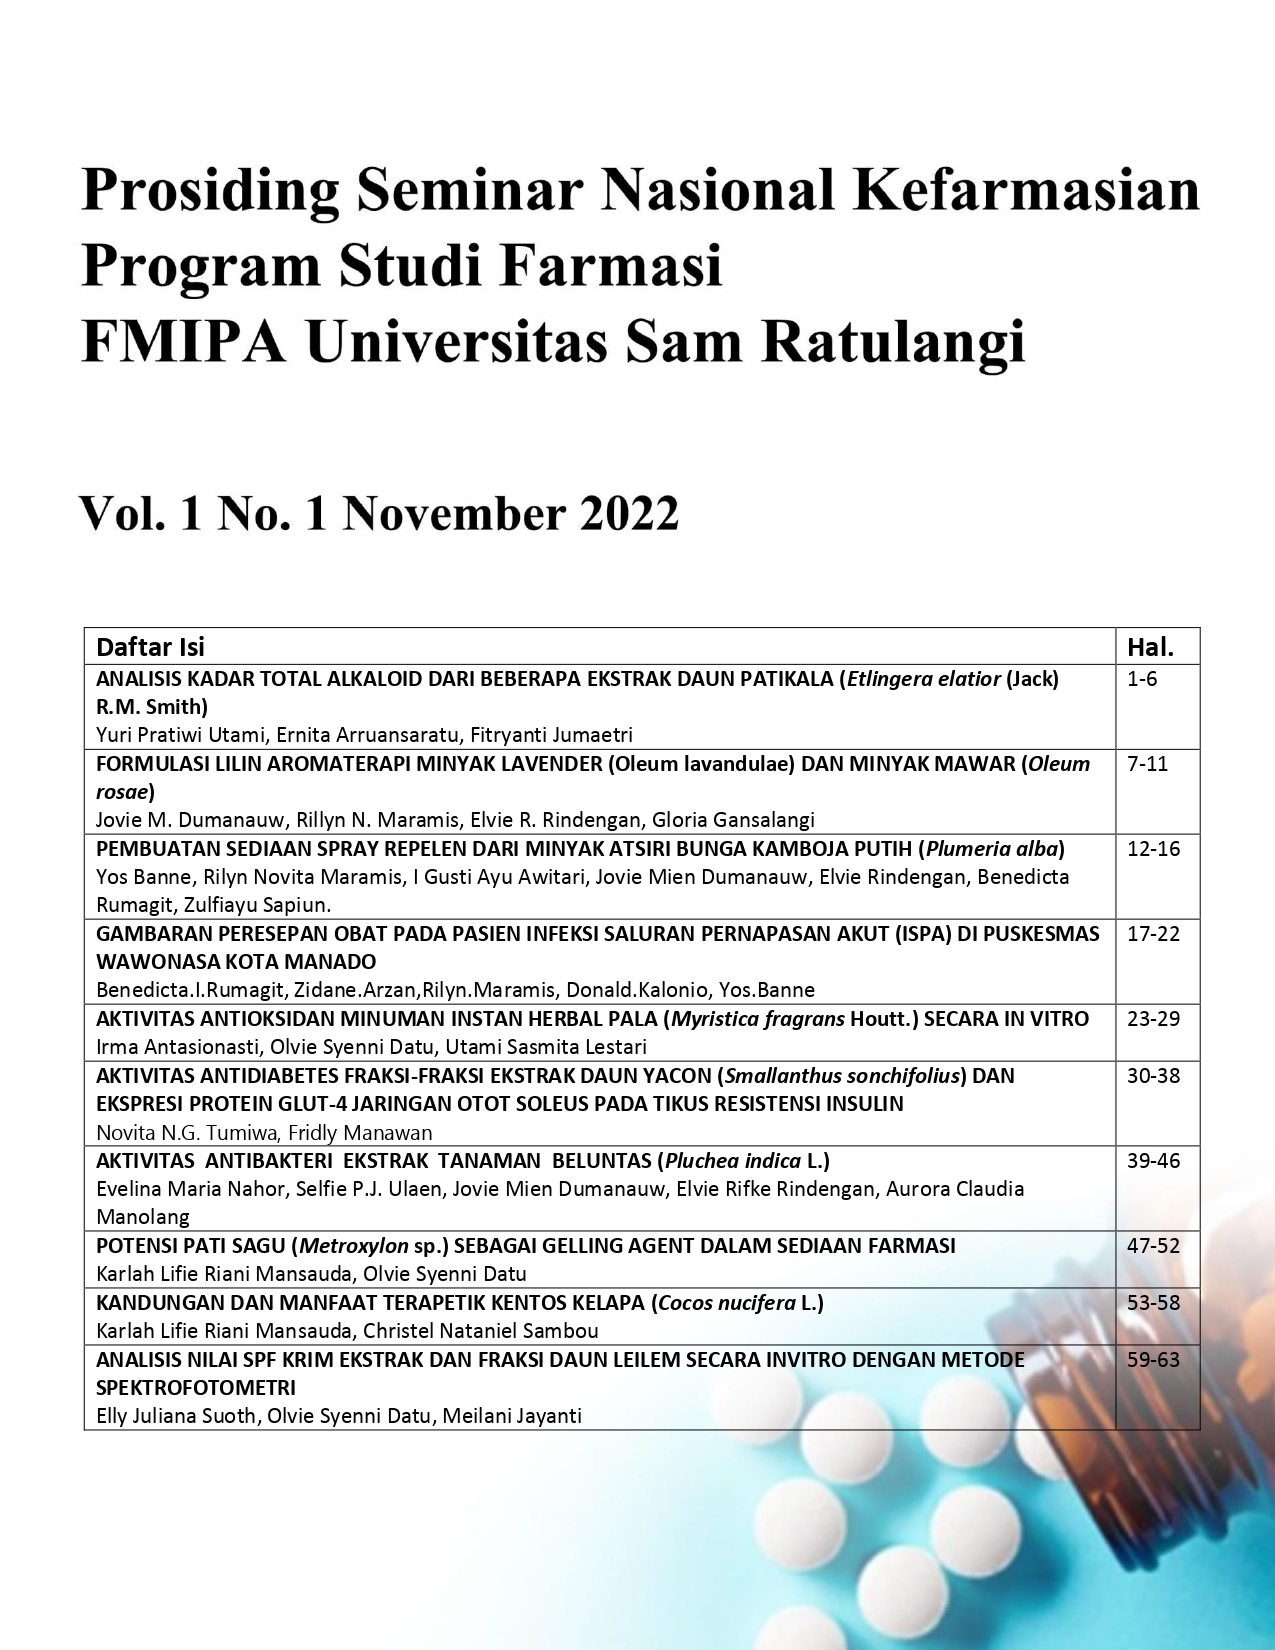 					Lihat Vol 1 No 1 (2022): PROSIDING SEMINAR NASIONAL KEFARMASIAN PROGRAM STUDI FARMASI FMIPA UNIVERSITAS SAM RATULANGI TAHUN 2022
				